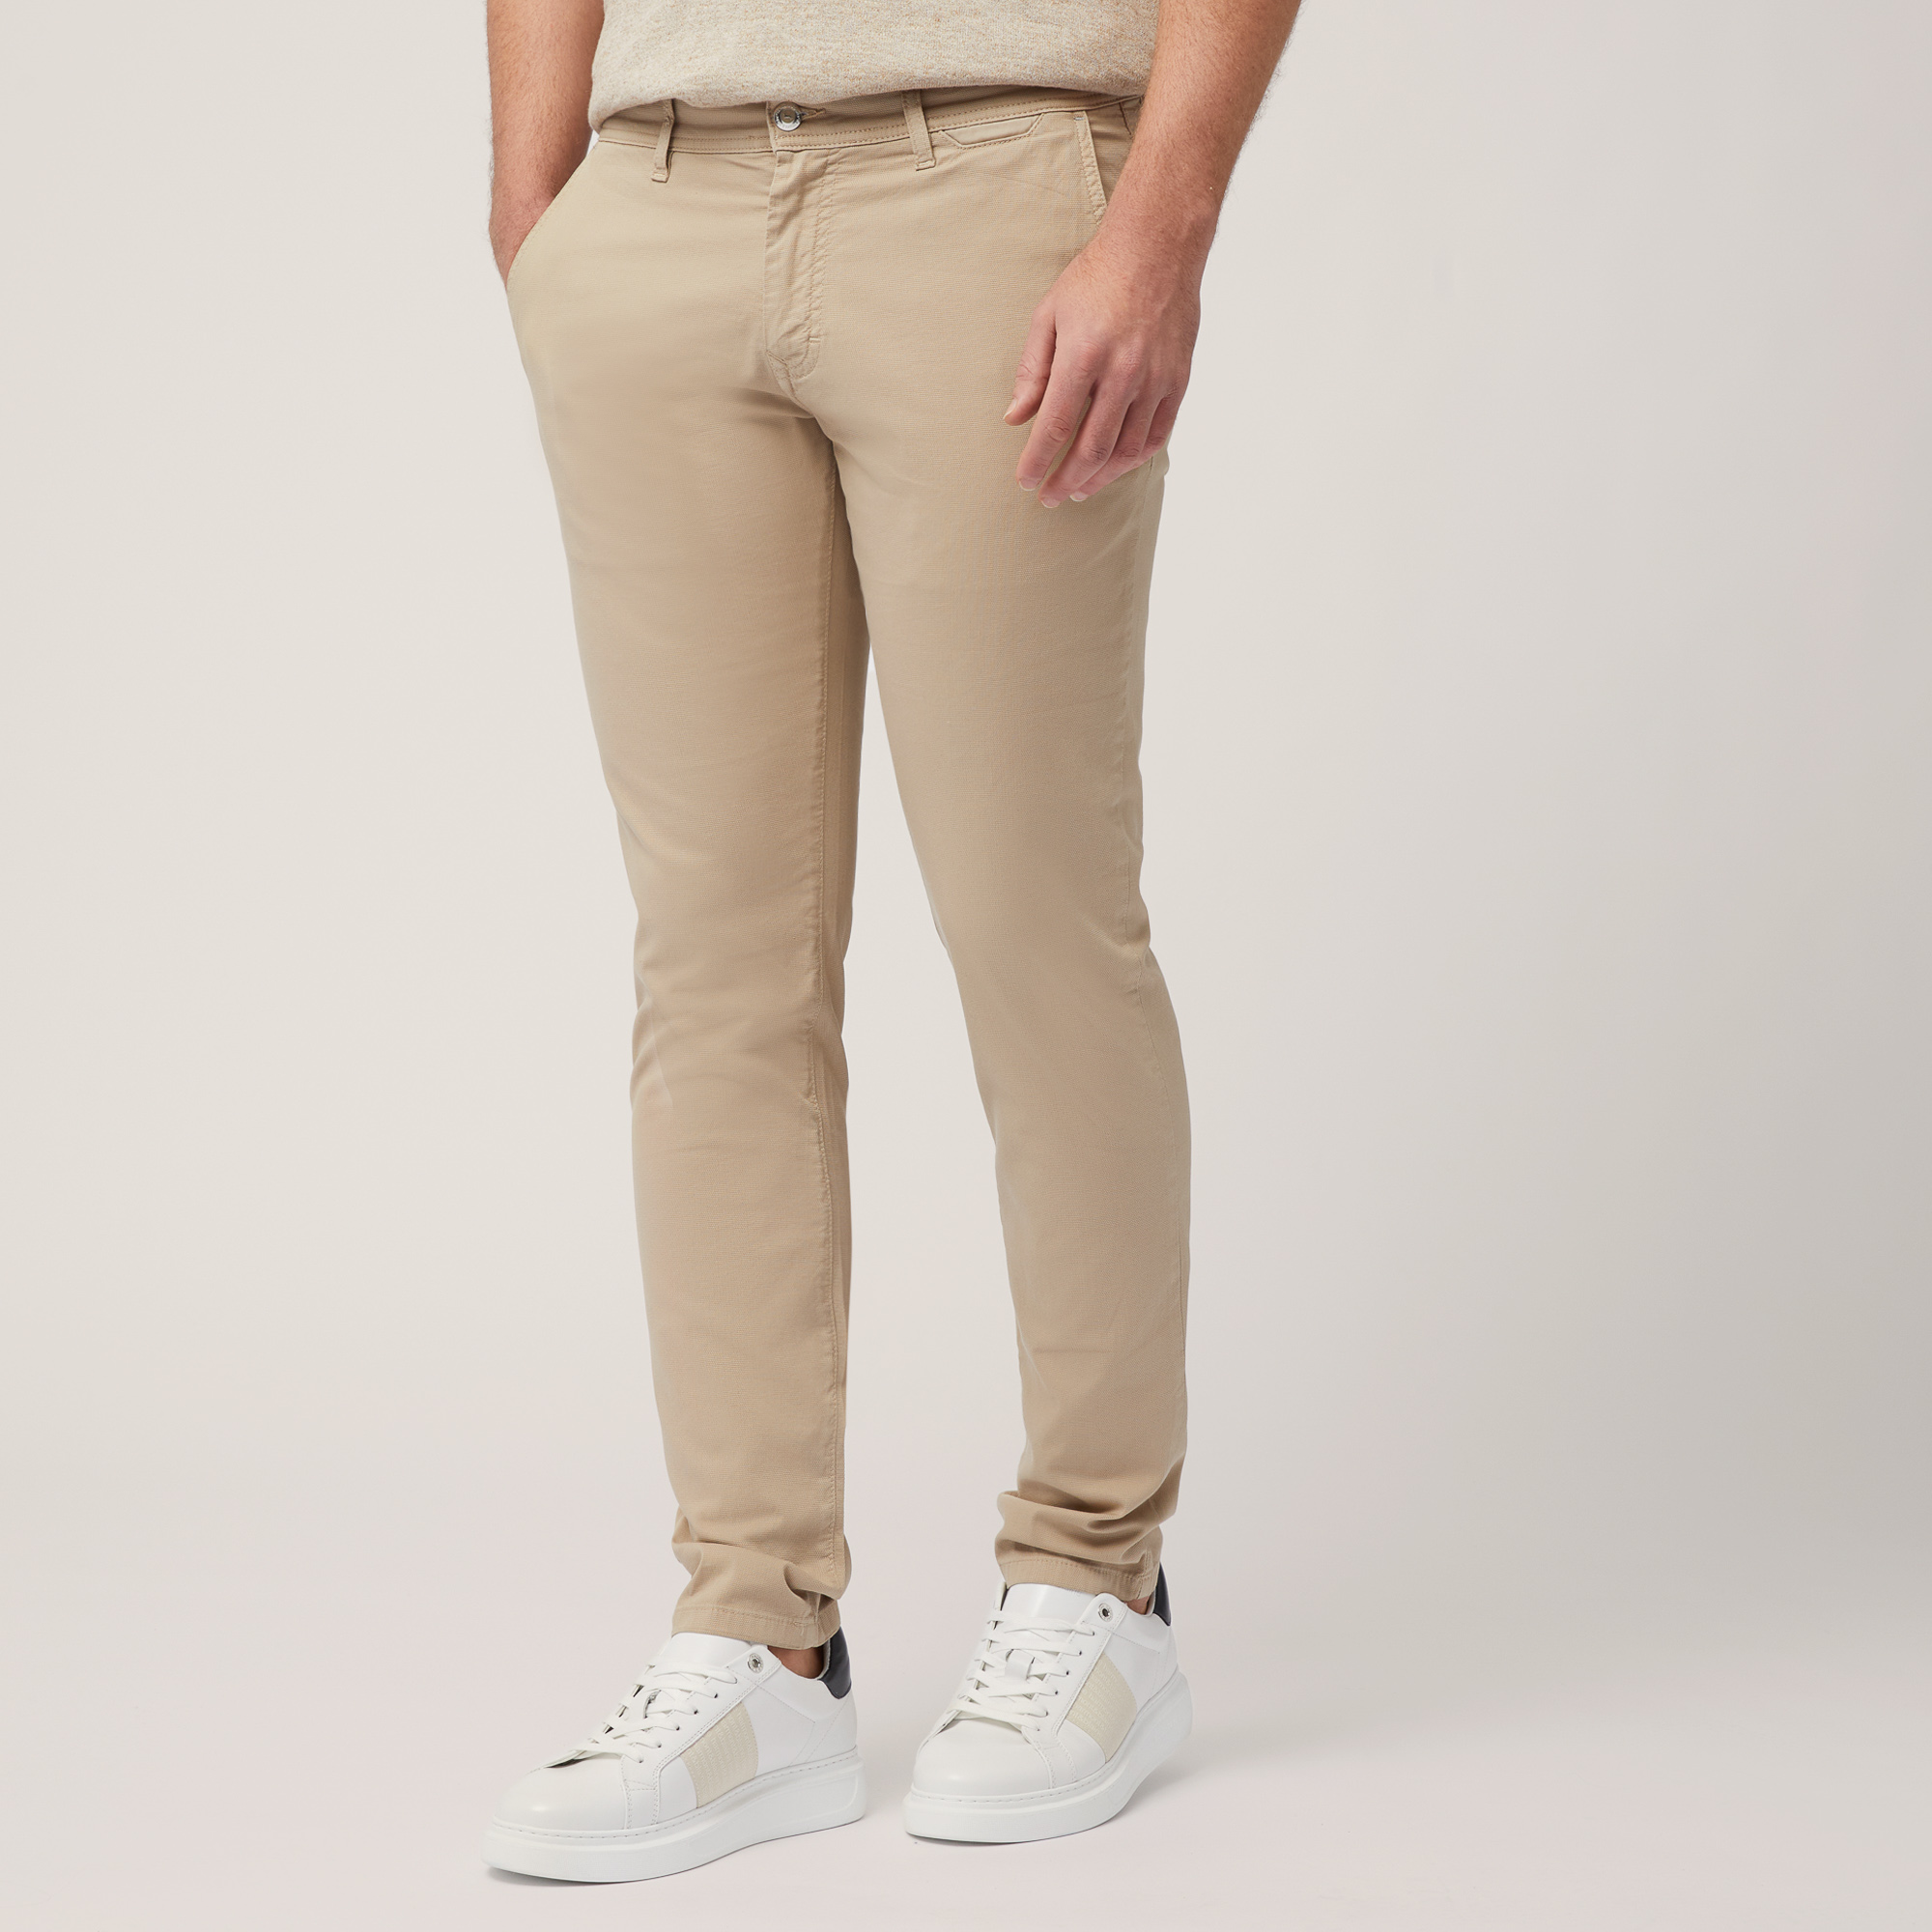 Pantaloni Colorfive, Beige, large image number 0